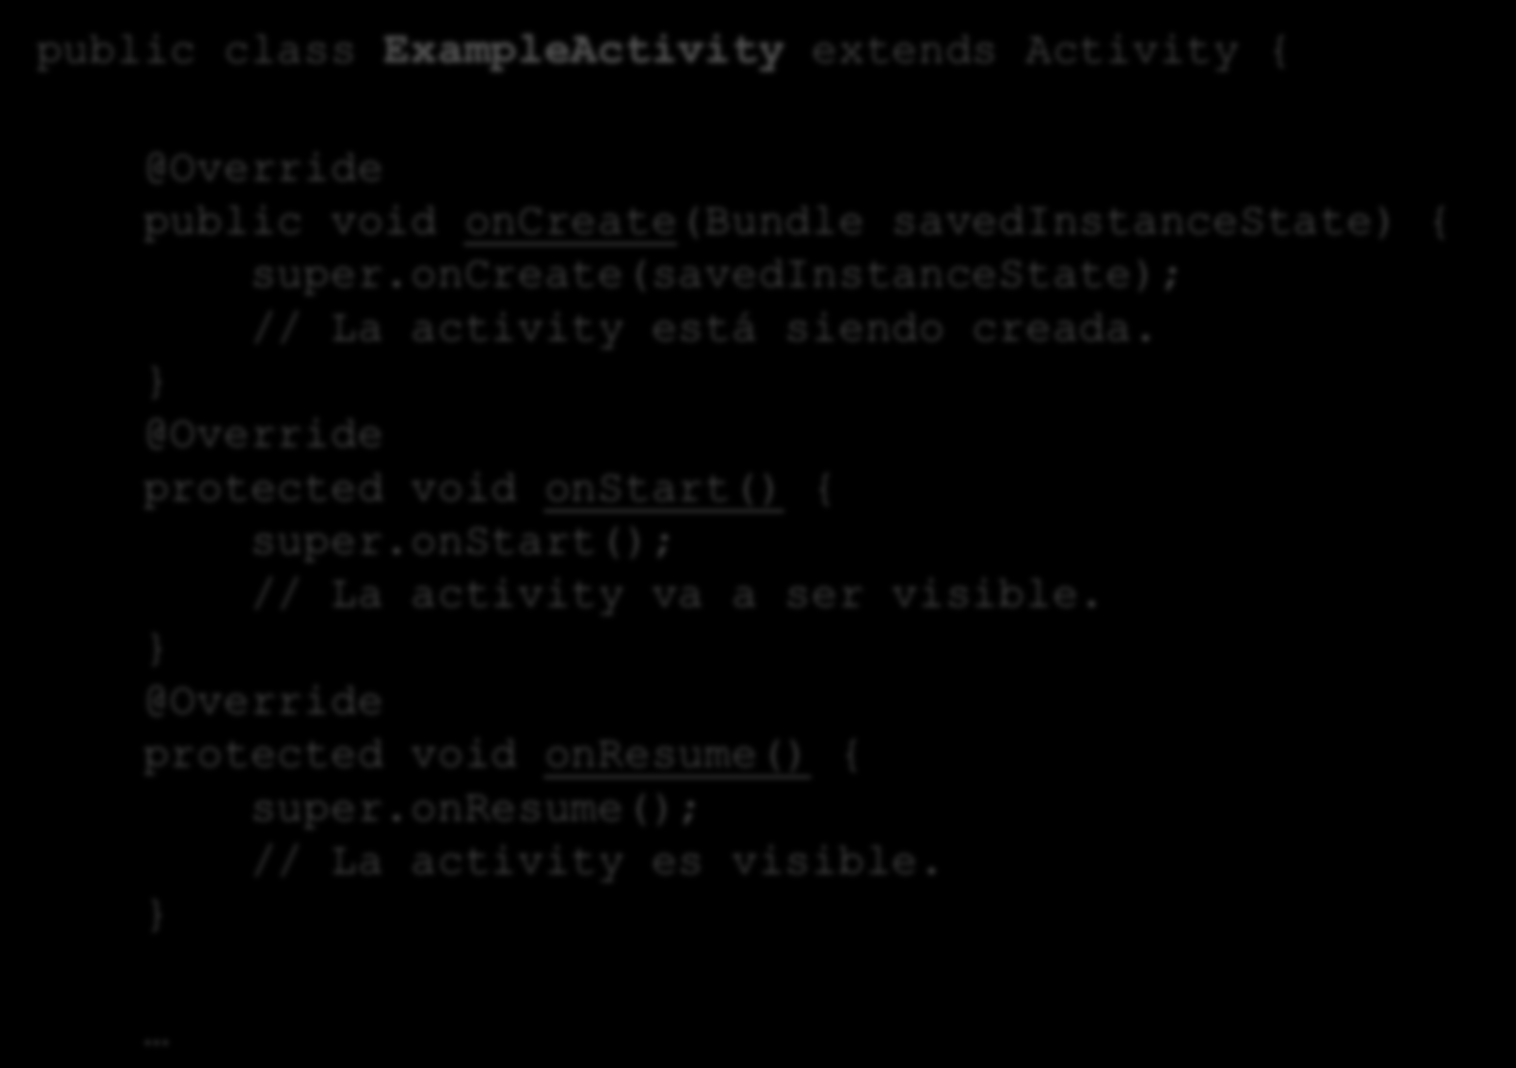 Activity public class ExampleActivity extends Activity { @Override public void oncreate(bundle savedinstancestate) { super.